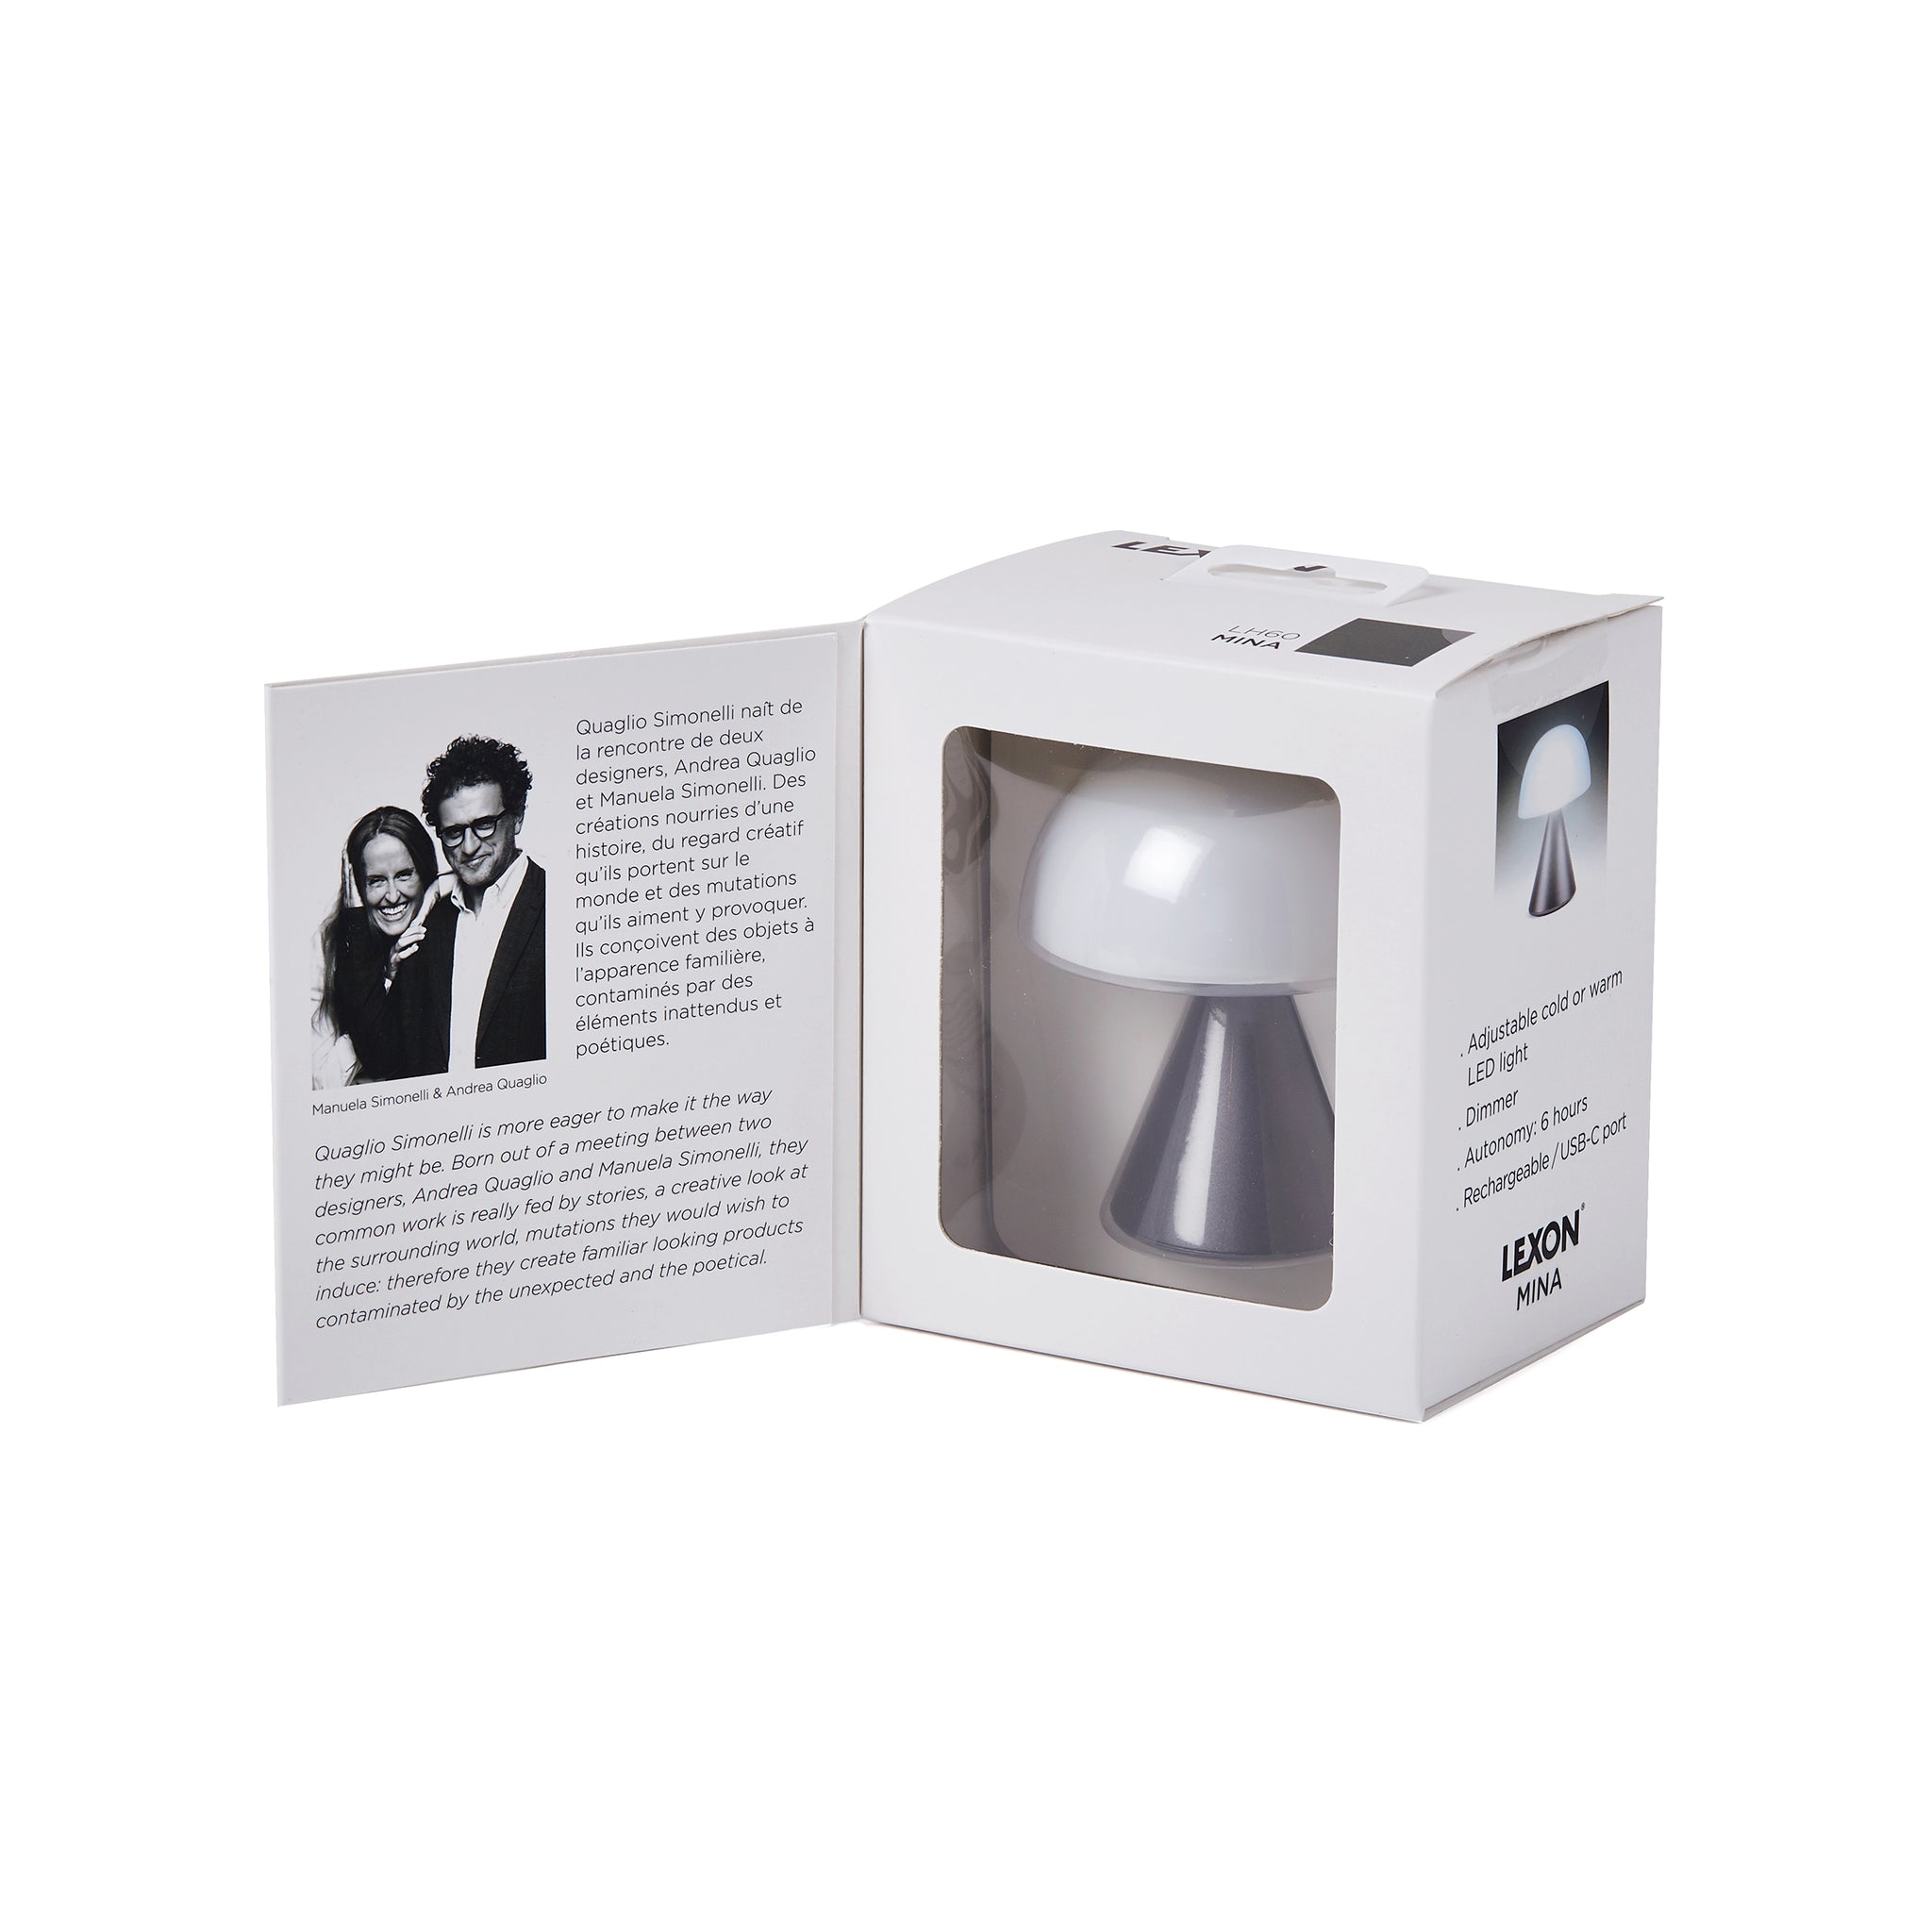 Lexon Mina Small│Oplaadbare LED lamp Glossy White│art. LH60WG│verpakking